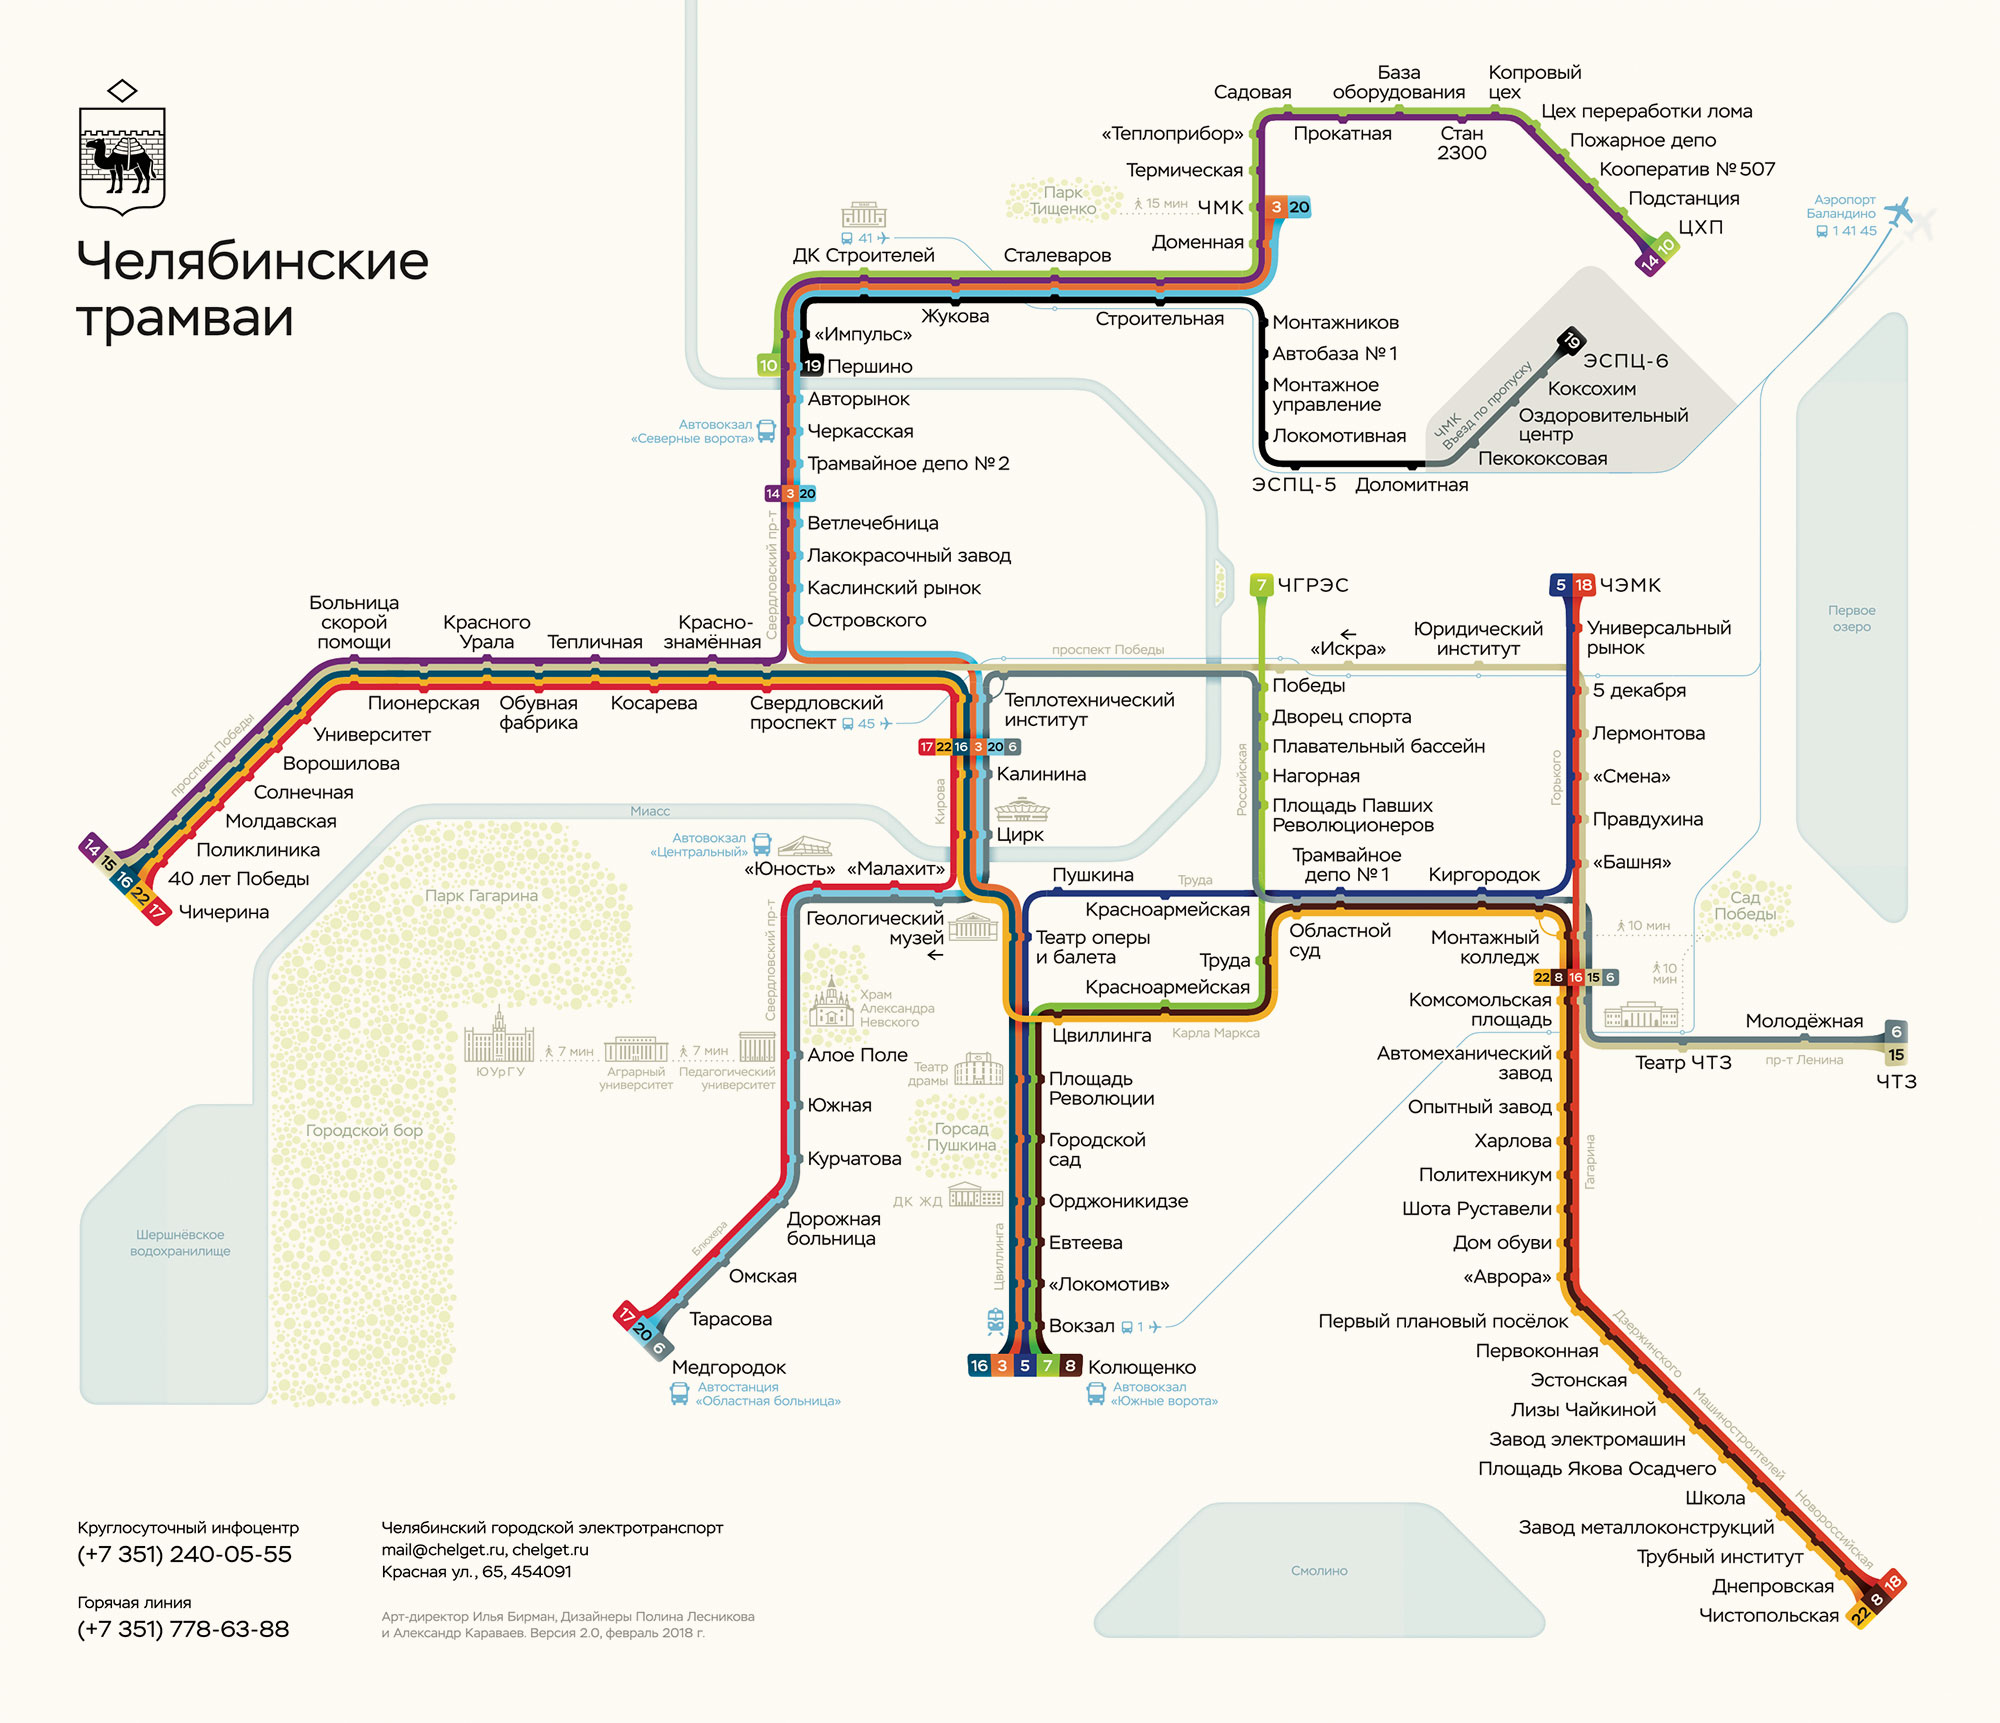 Chelyabinsk trams transit map version 2